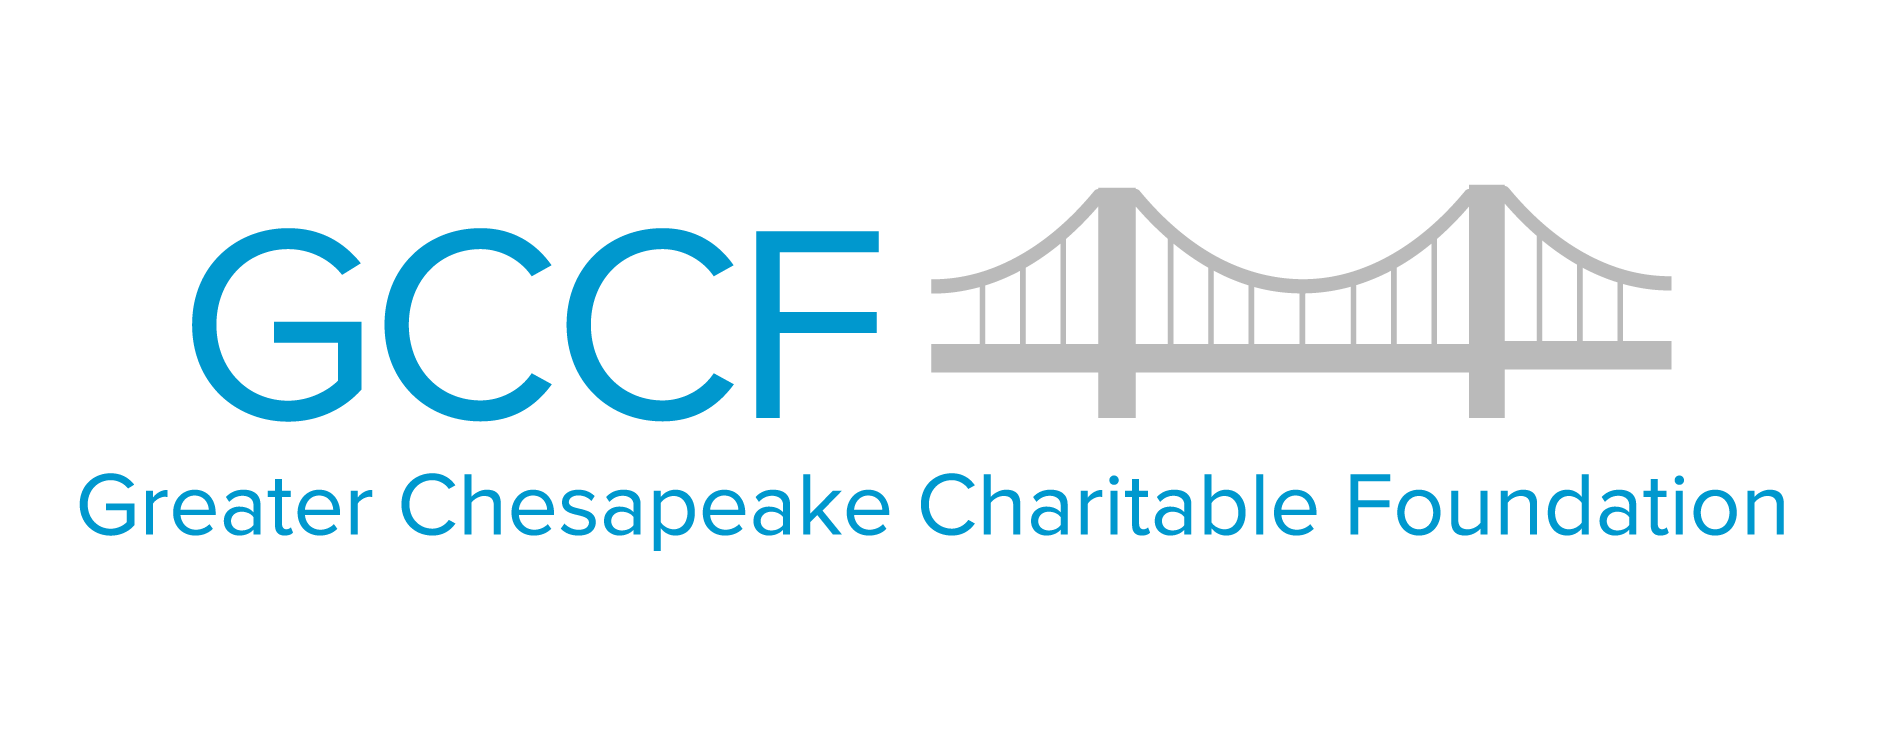 Greater Chesapeake Charitable Foundation logo